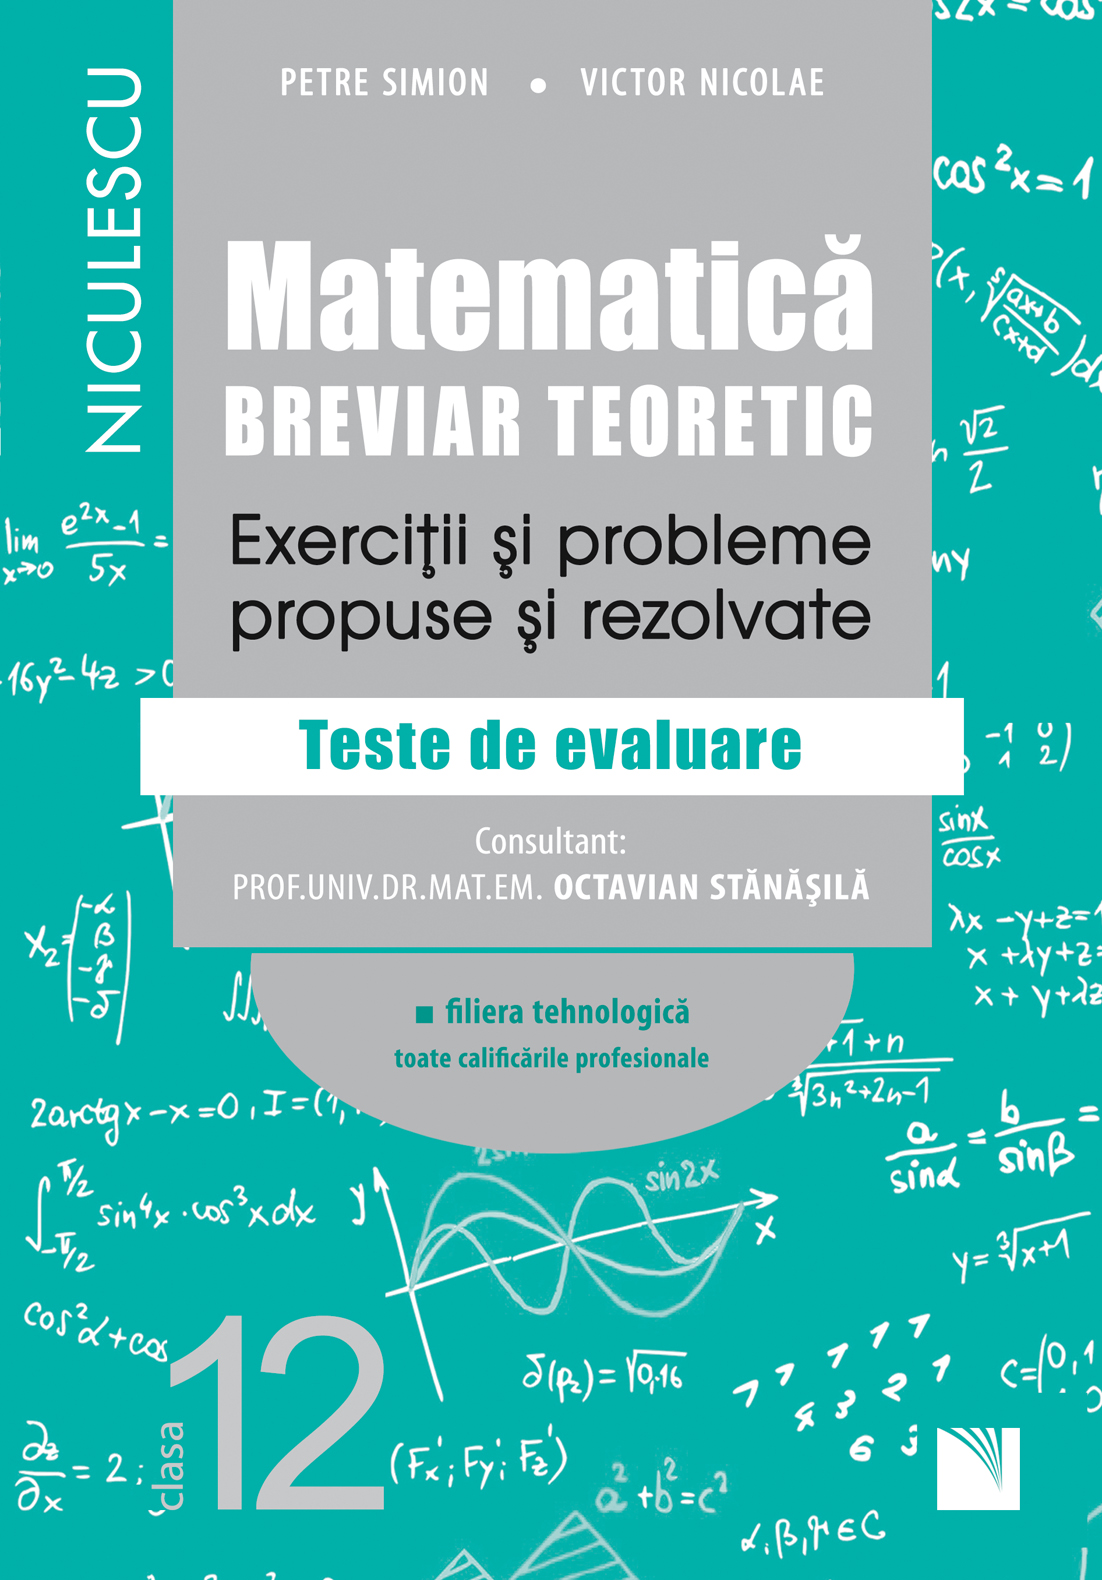 Matematica, clasa a XII-a. Breviar teoretic - Filiera tehnologica | Petre Simion, Victor Nicolae